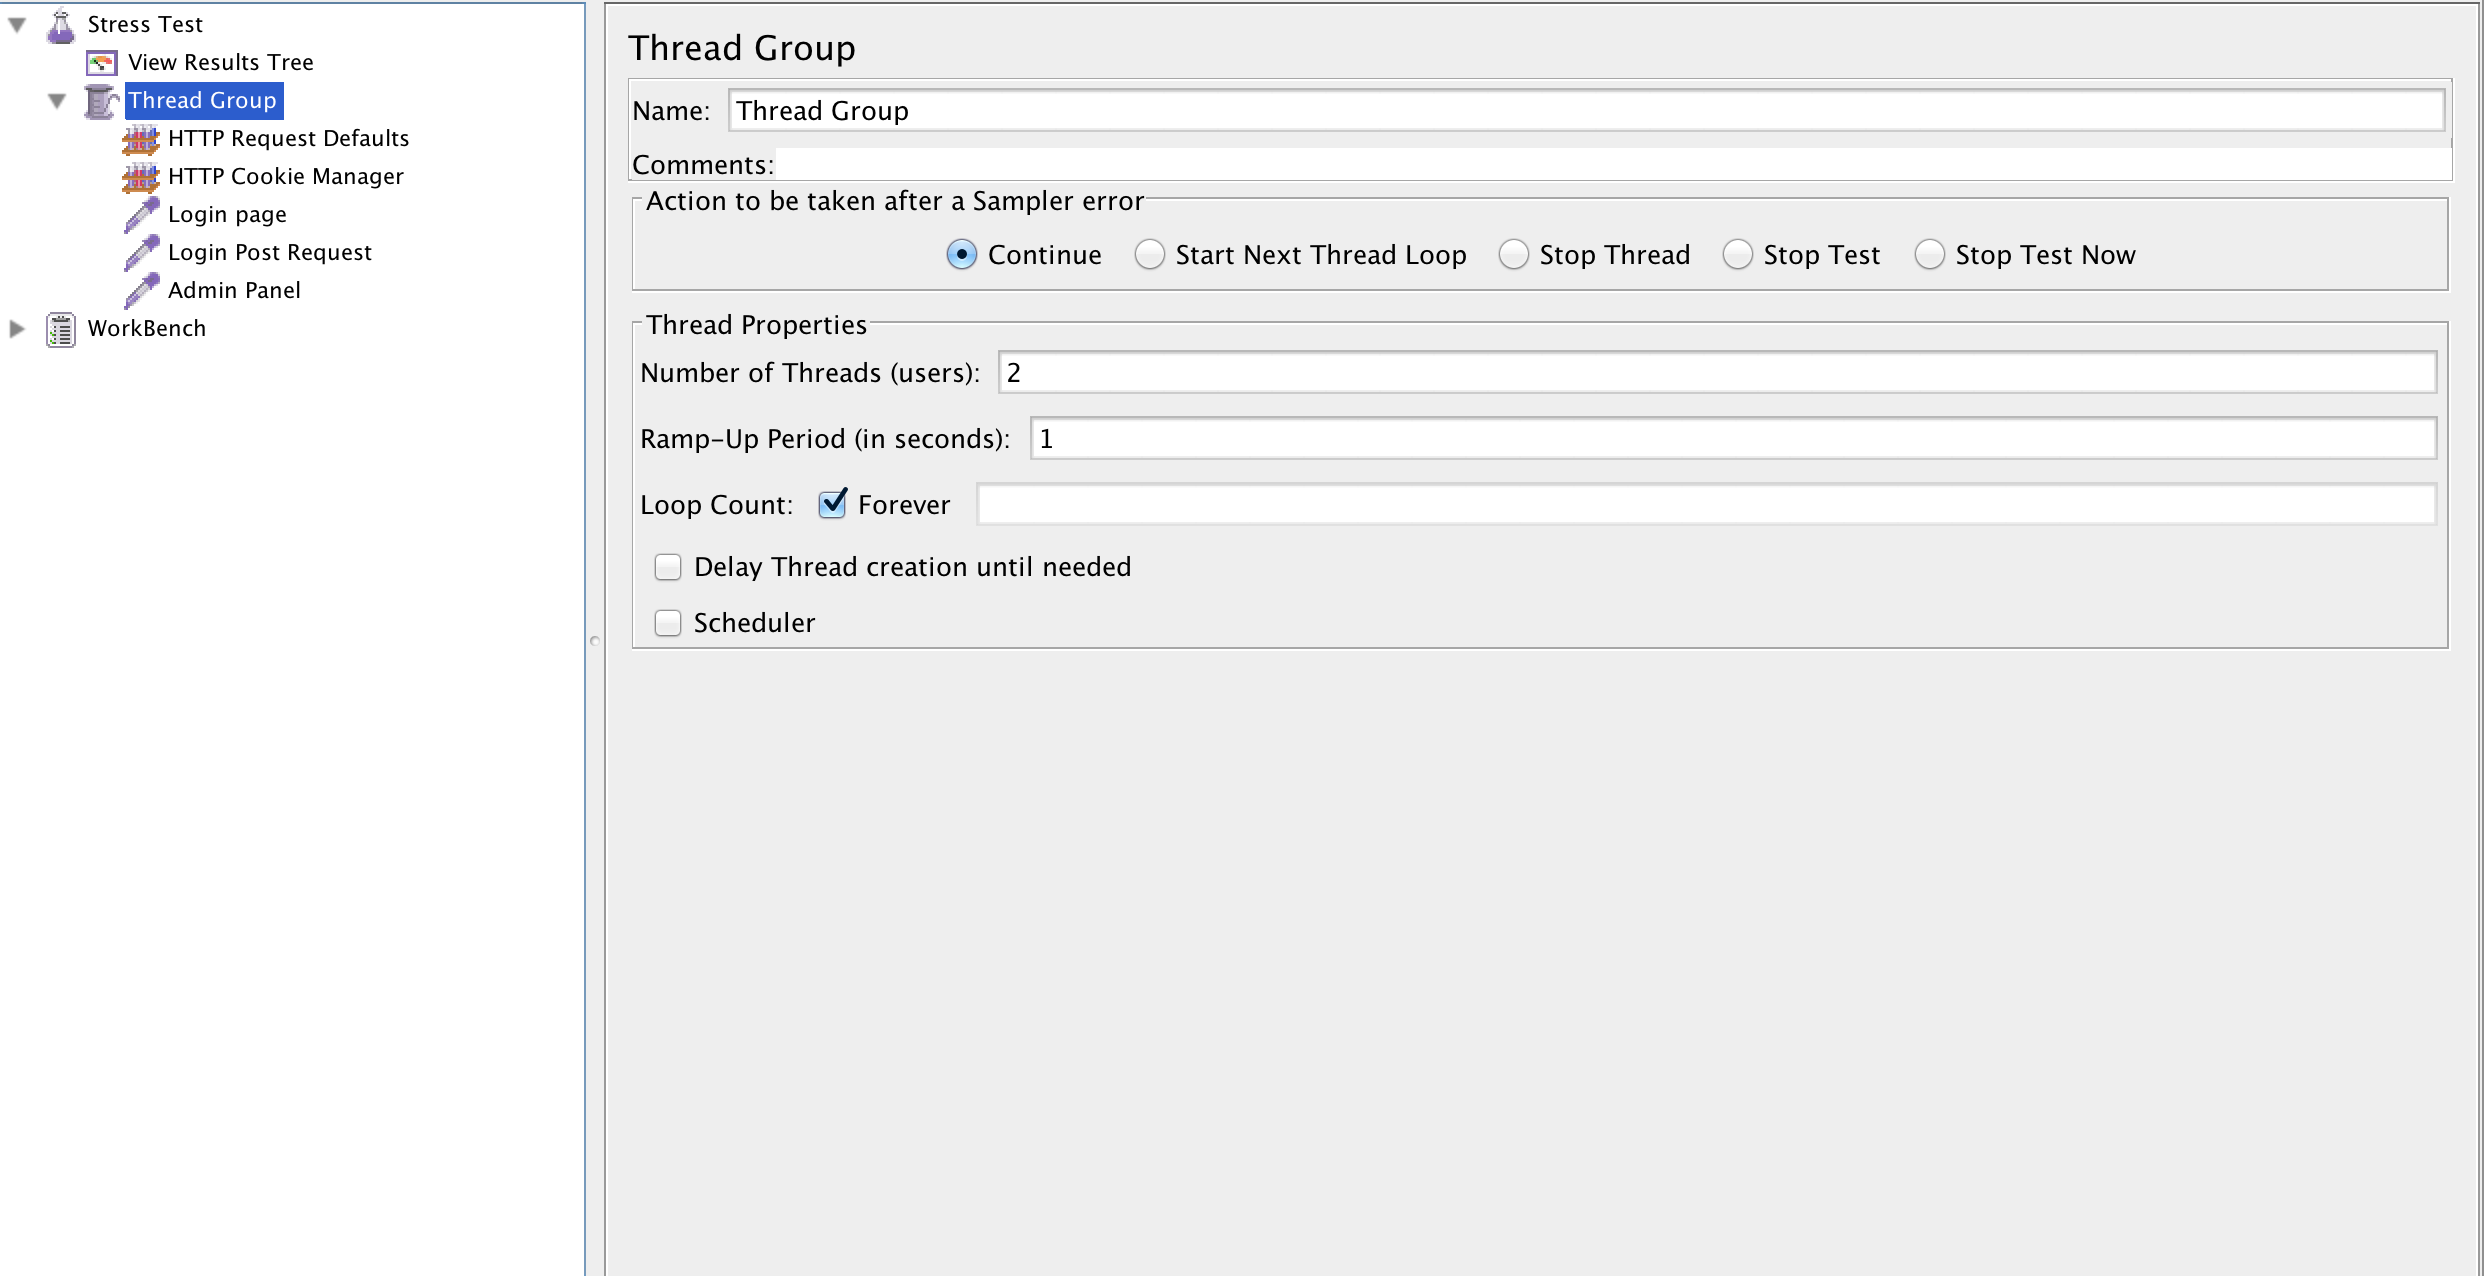 "Screenshot of Thread Group window"